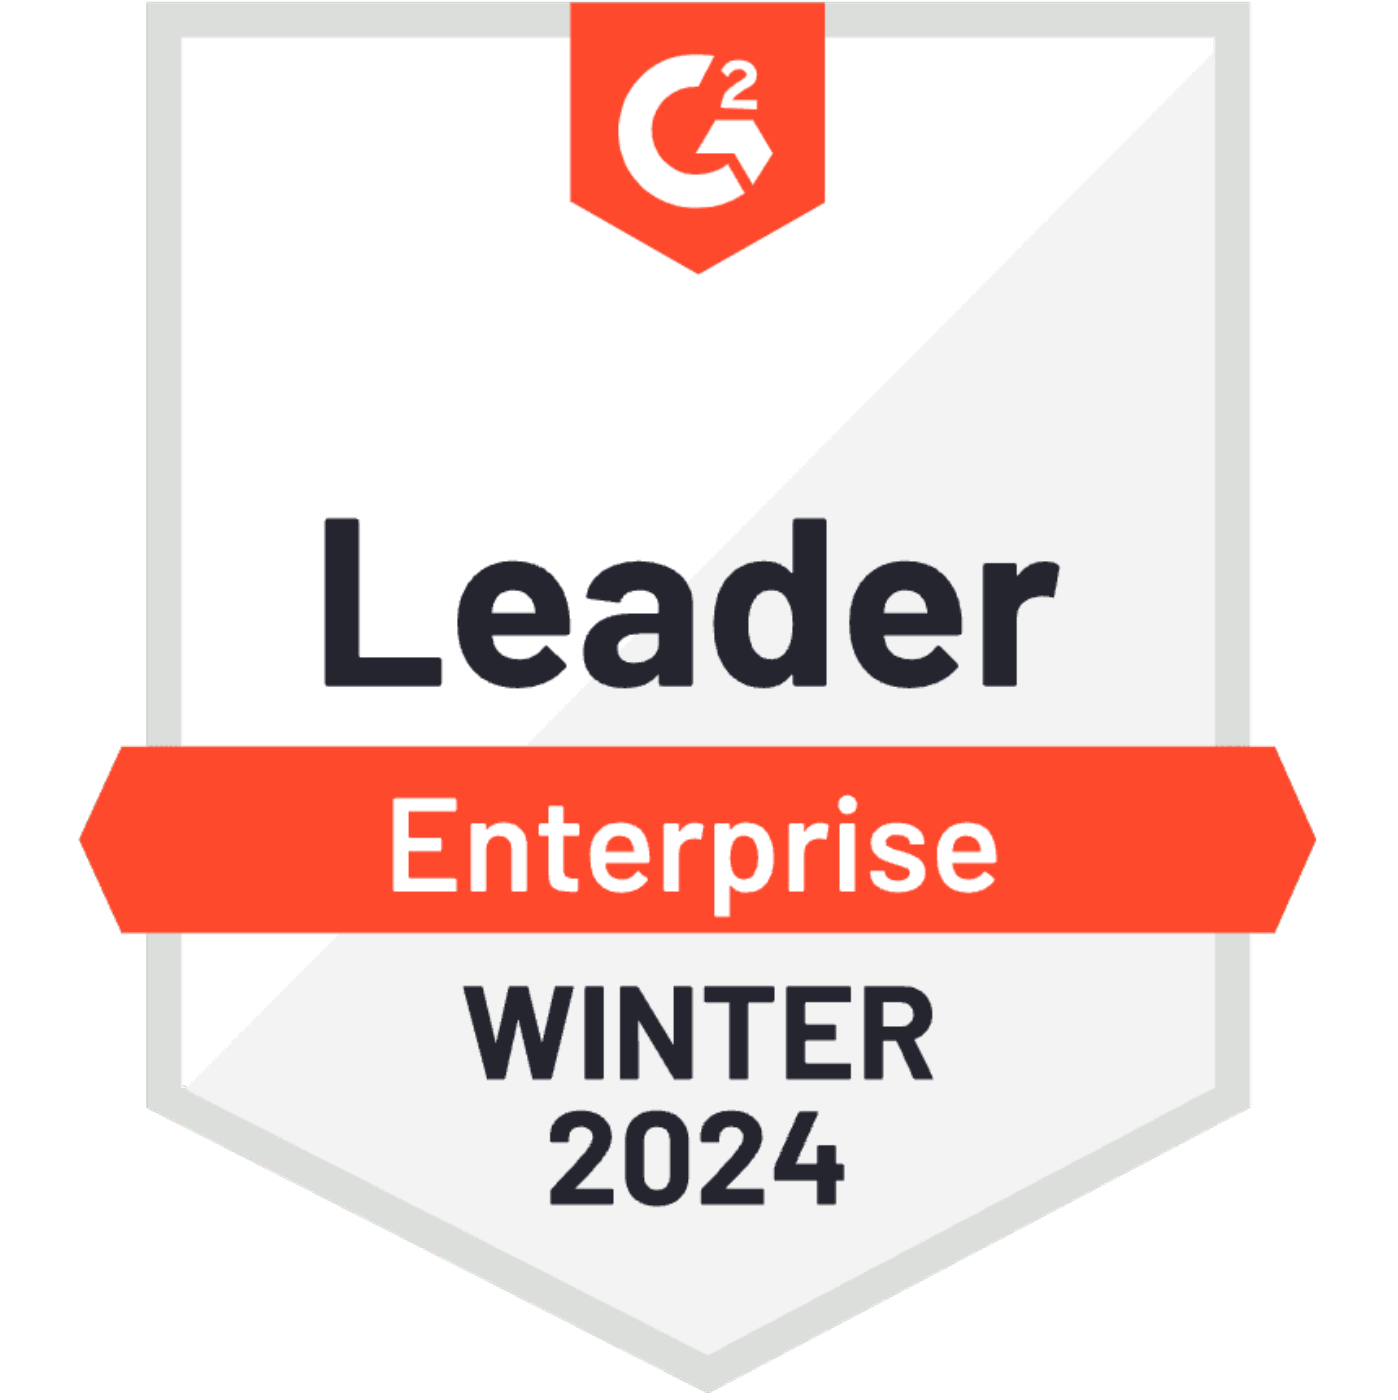 G2 Badge: Leader Enterprise Winter 2024